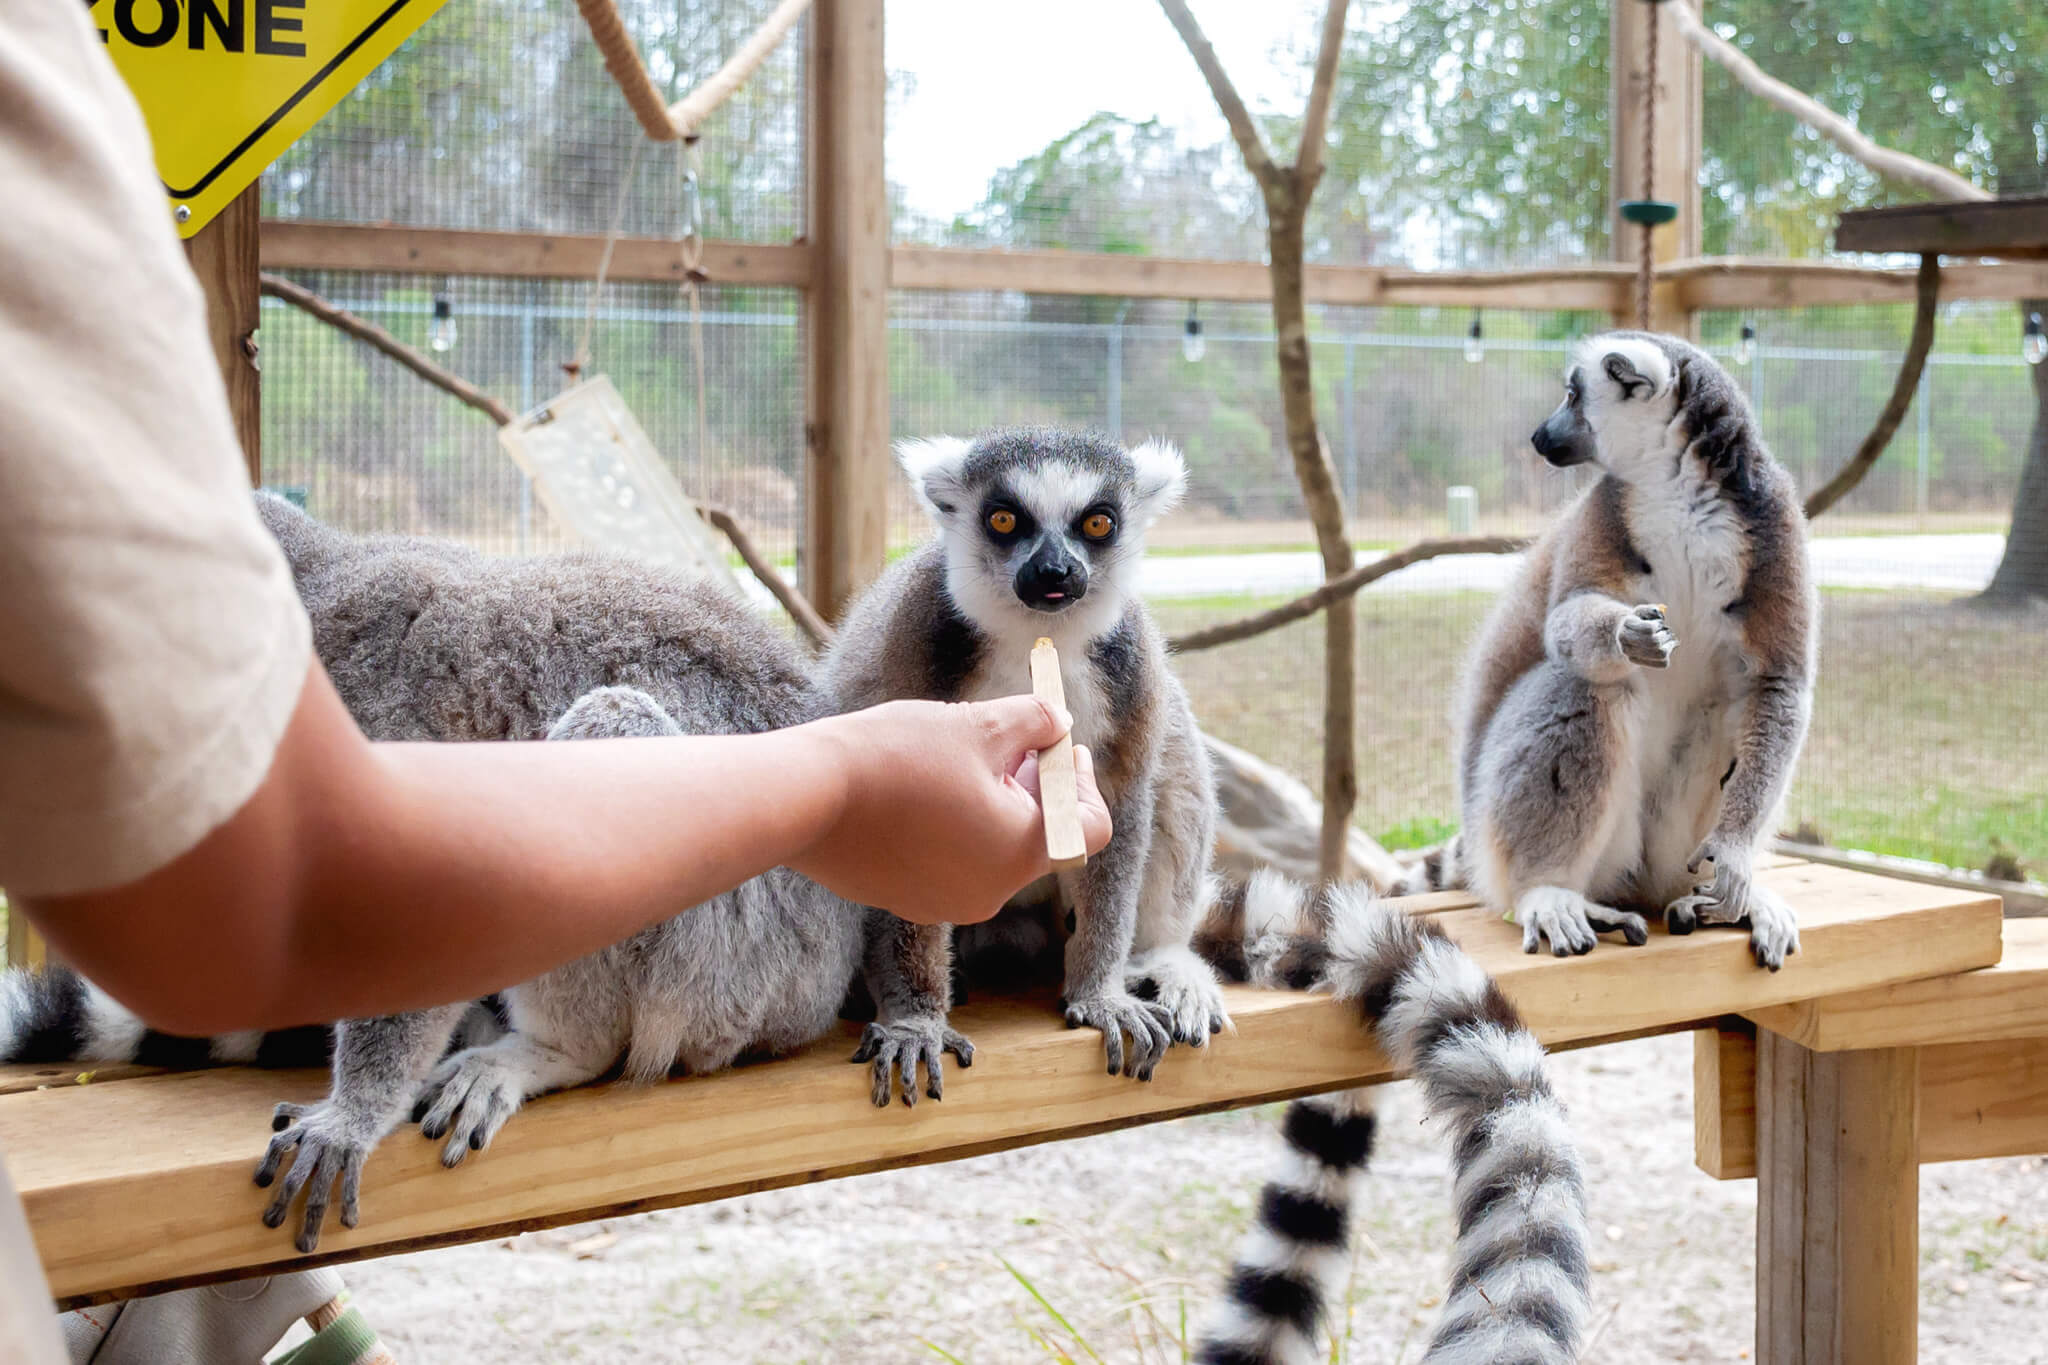 Alabama Gulf Coast Zoo Lemur Encounter